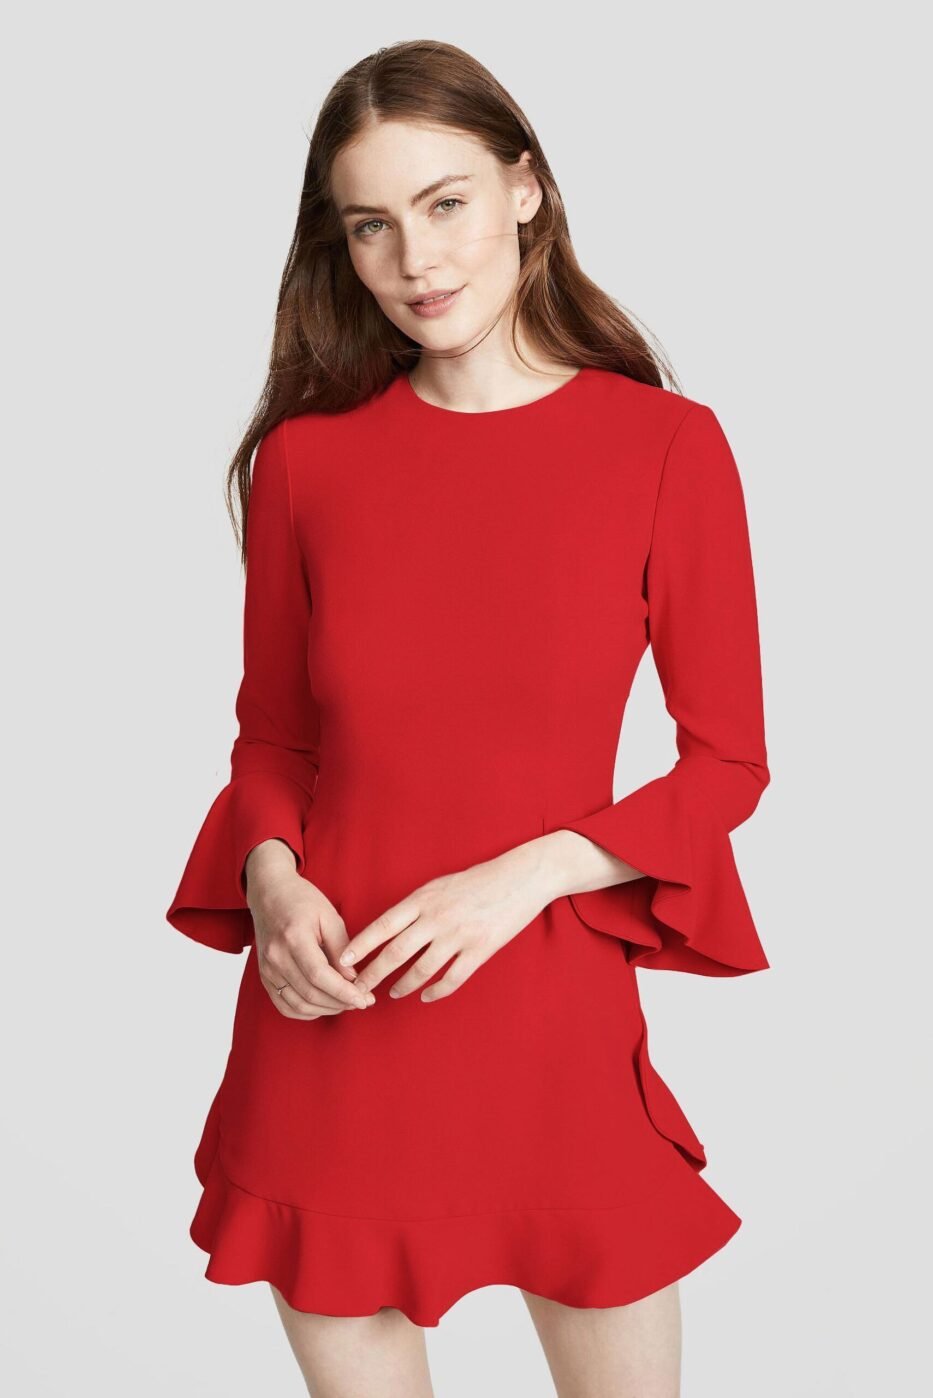 fashion-designer-red-dress